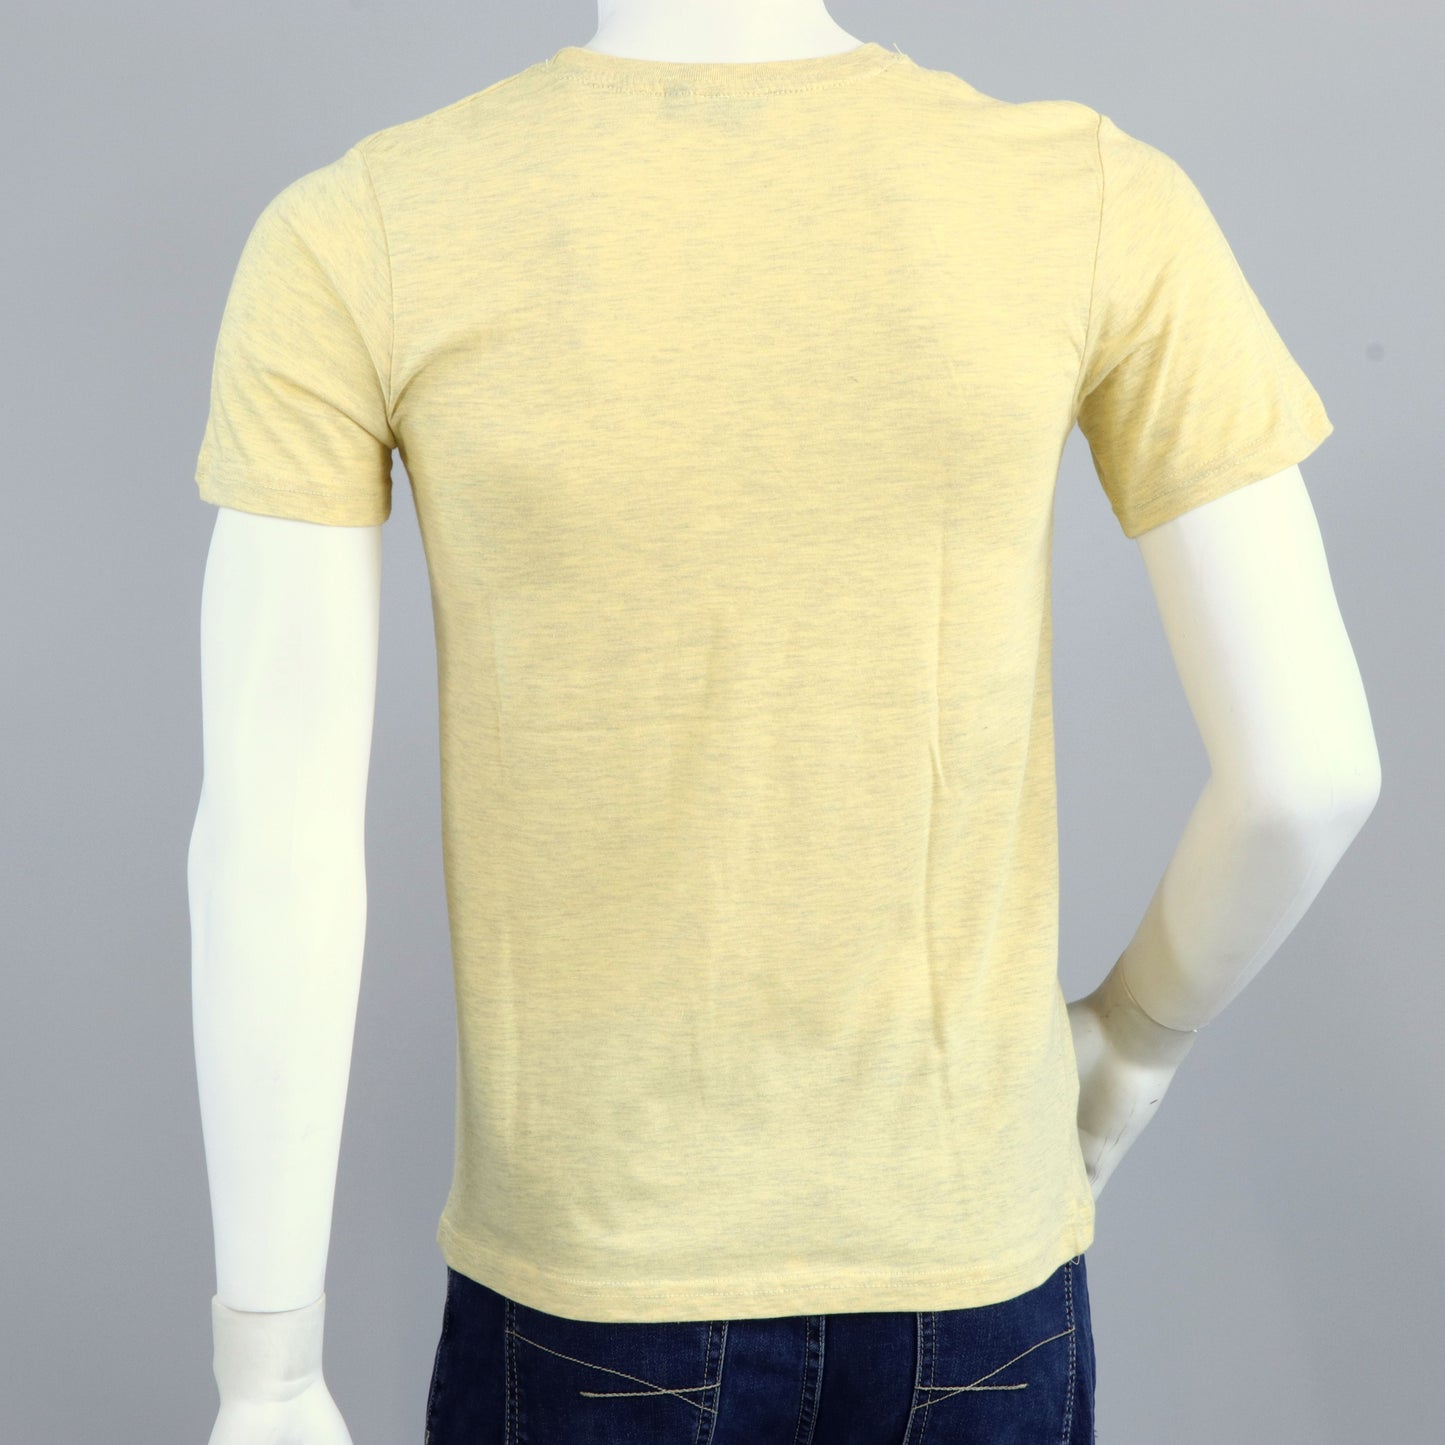 T-shirt yellow surf avec la vague de Carro en blanc